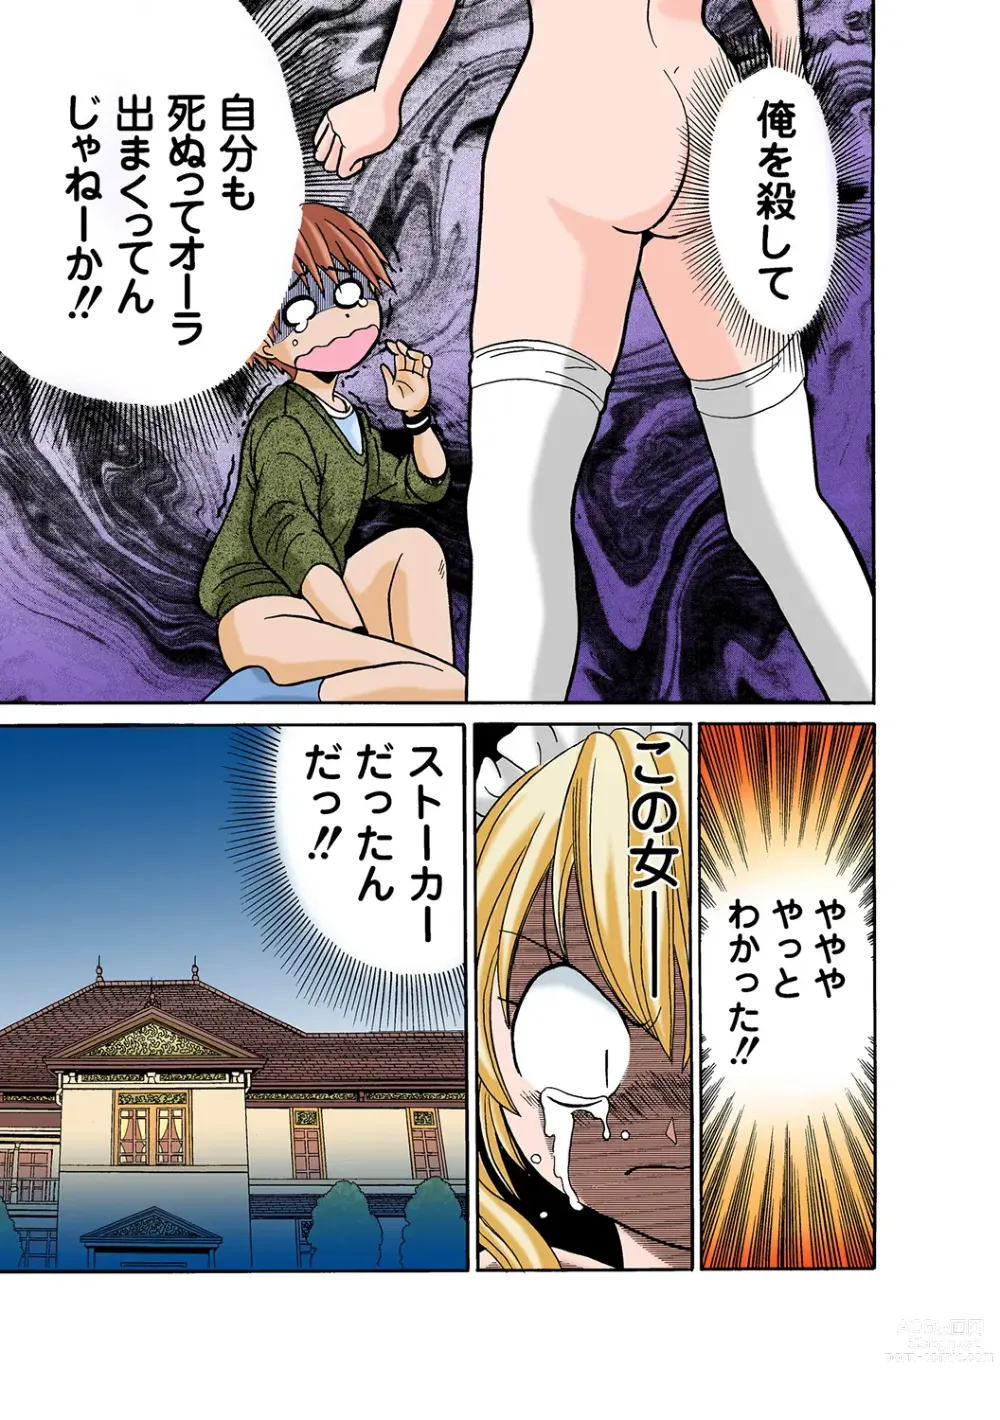 Page 113 of manga HiME-Mania Vol. 44